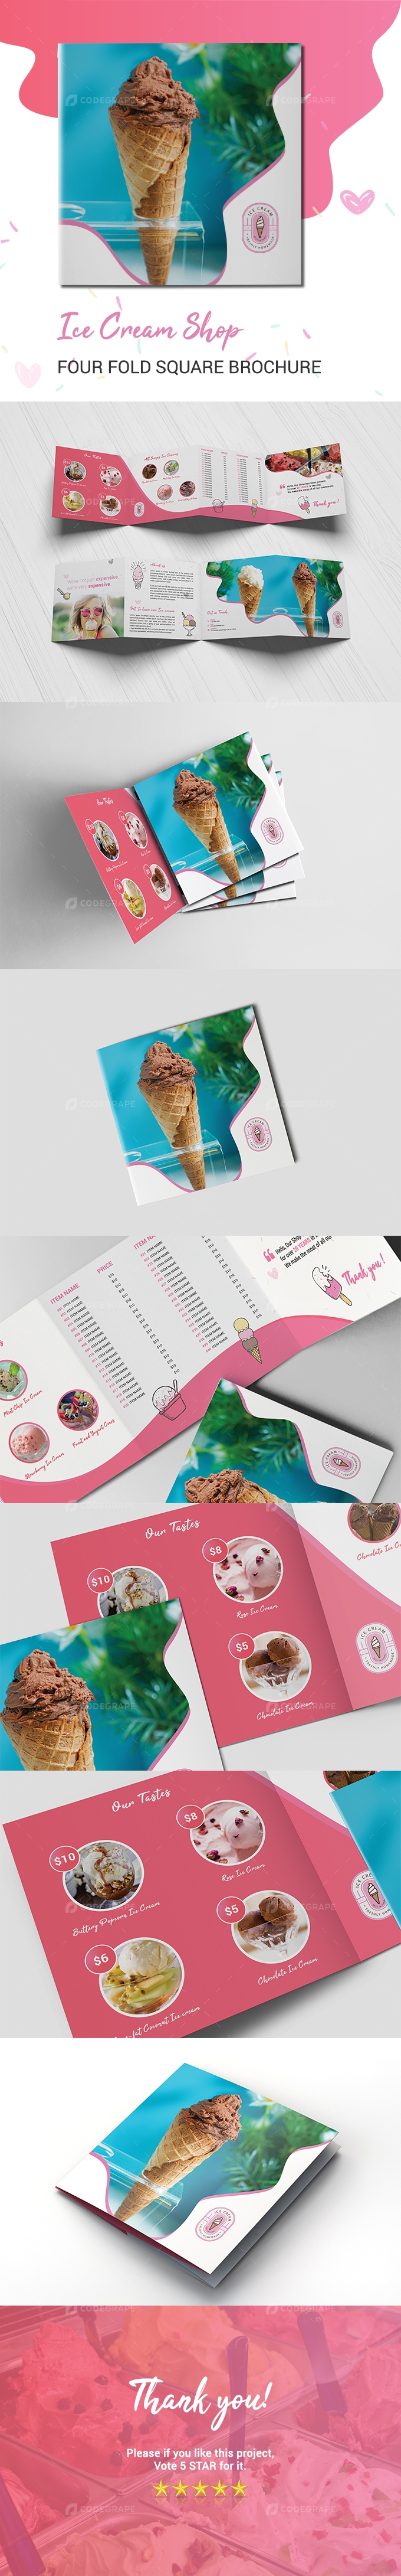 Ice Cream Shop Four Fold Square Brochure